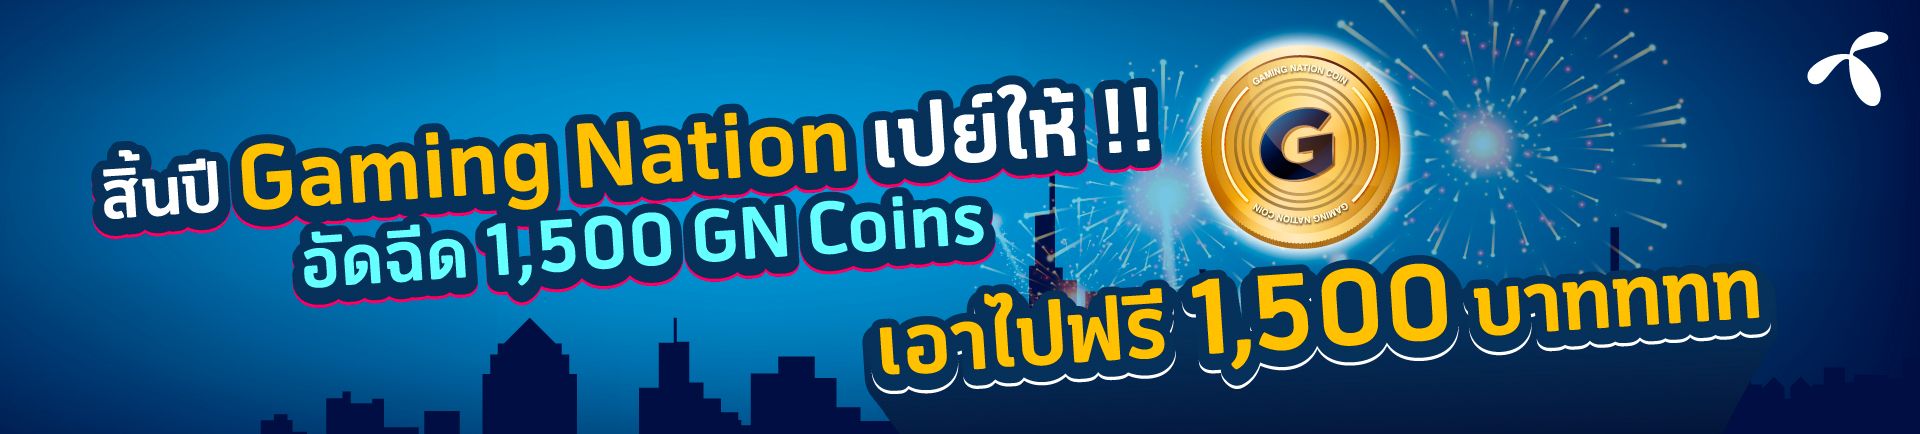 dtac-gamingnation-gn-coin